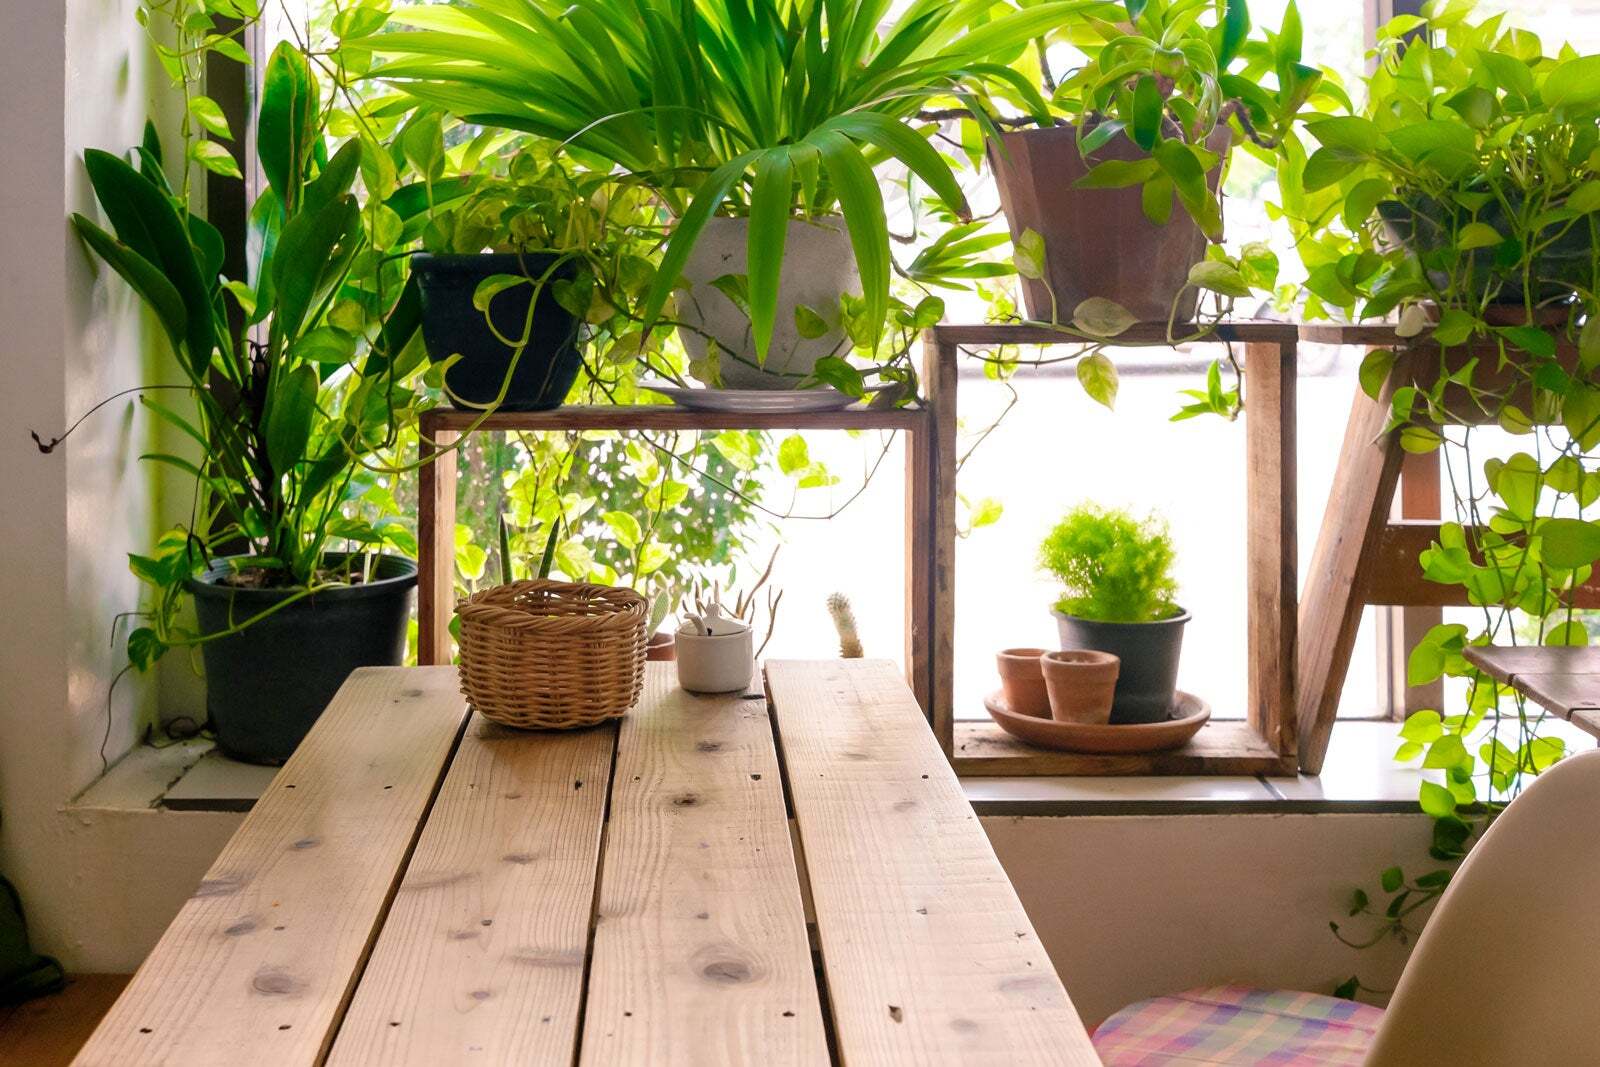 DIY Guide: Building A Grow Room For Indoor Gardening